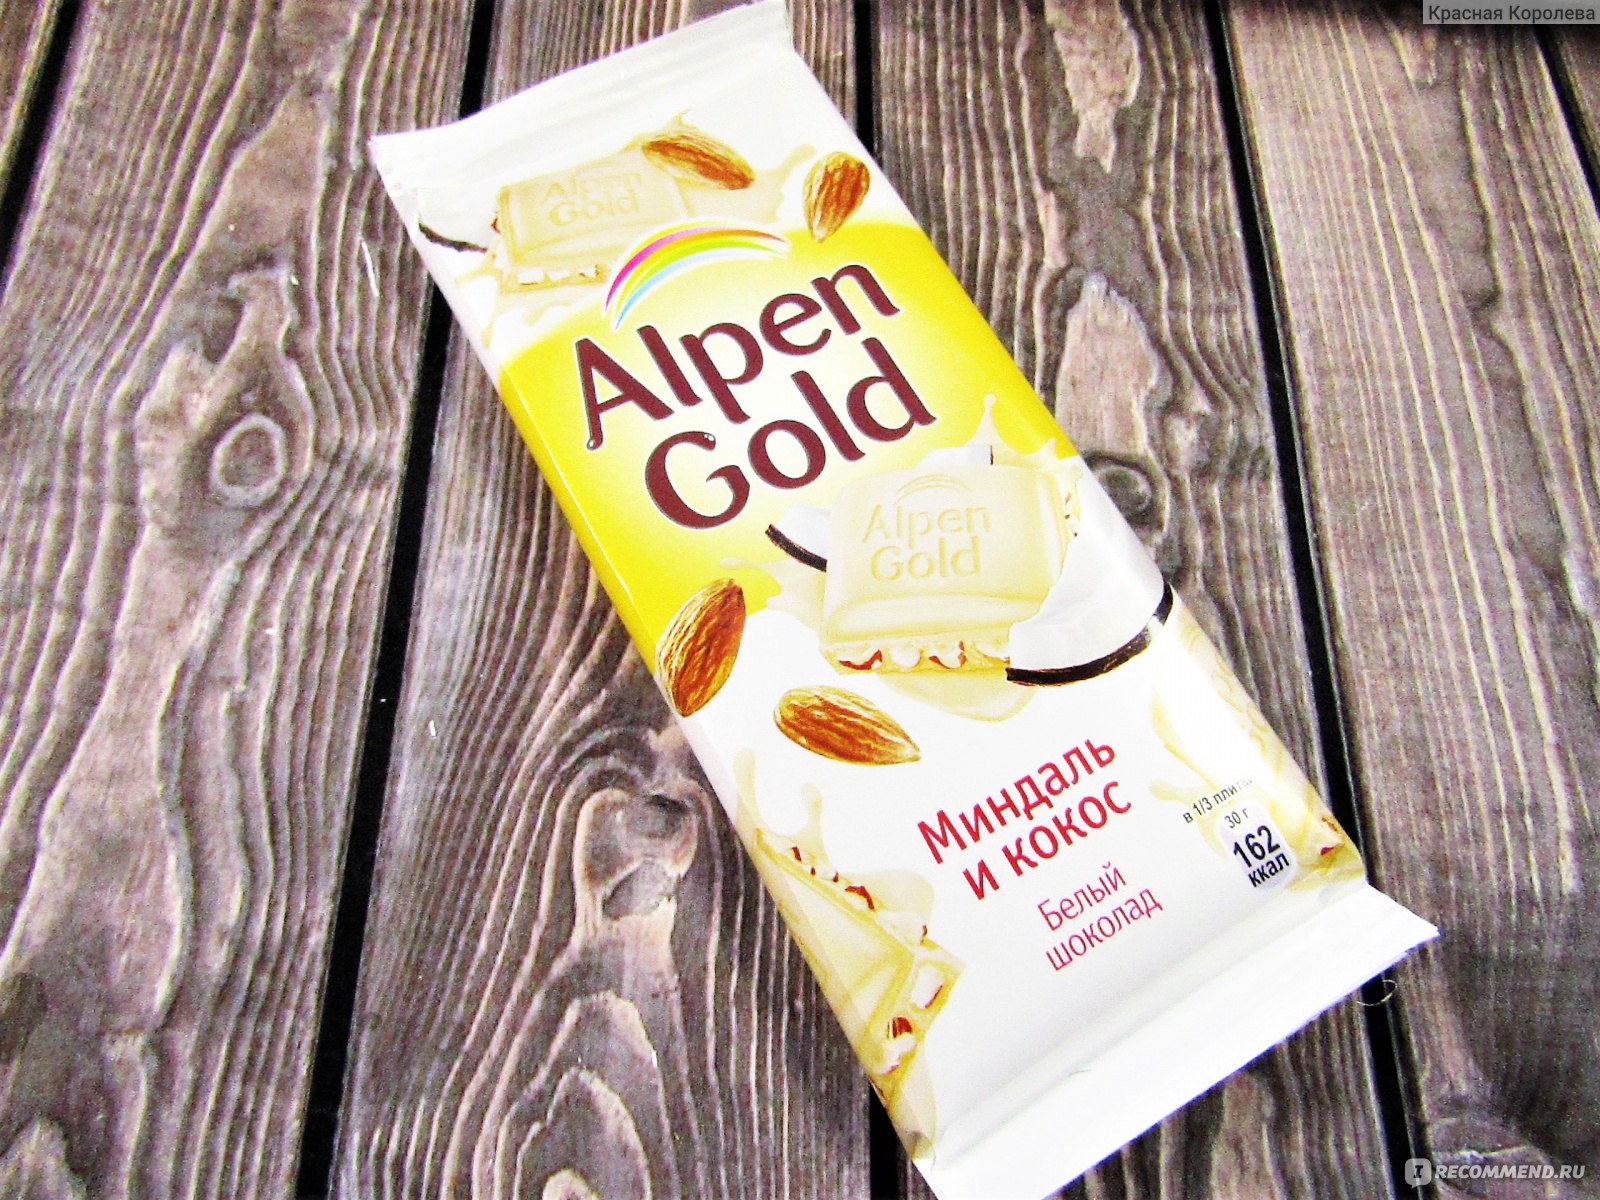 Шоколад Альпен Гольд с миндалем